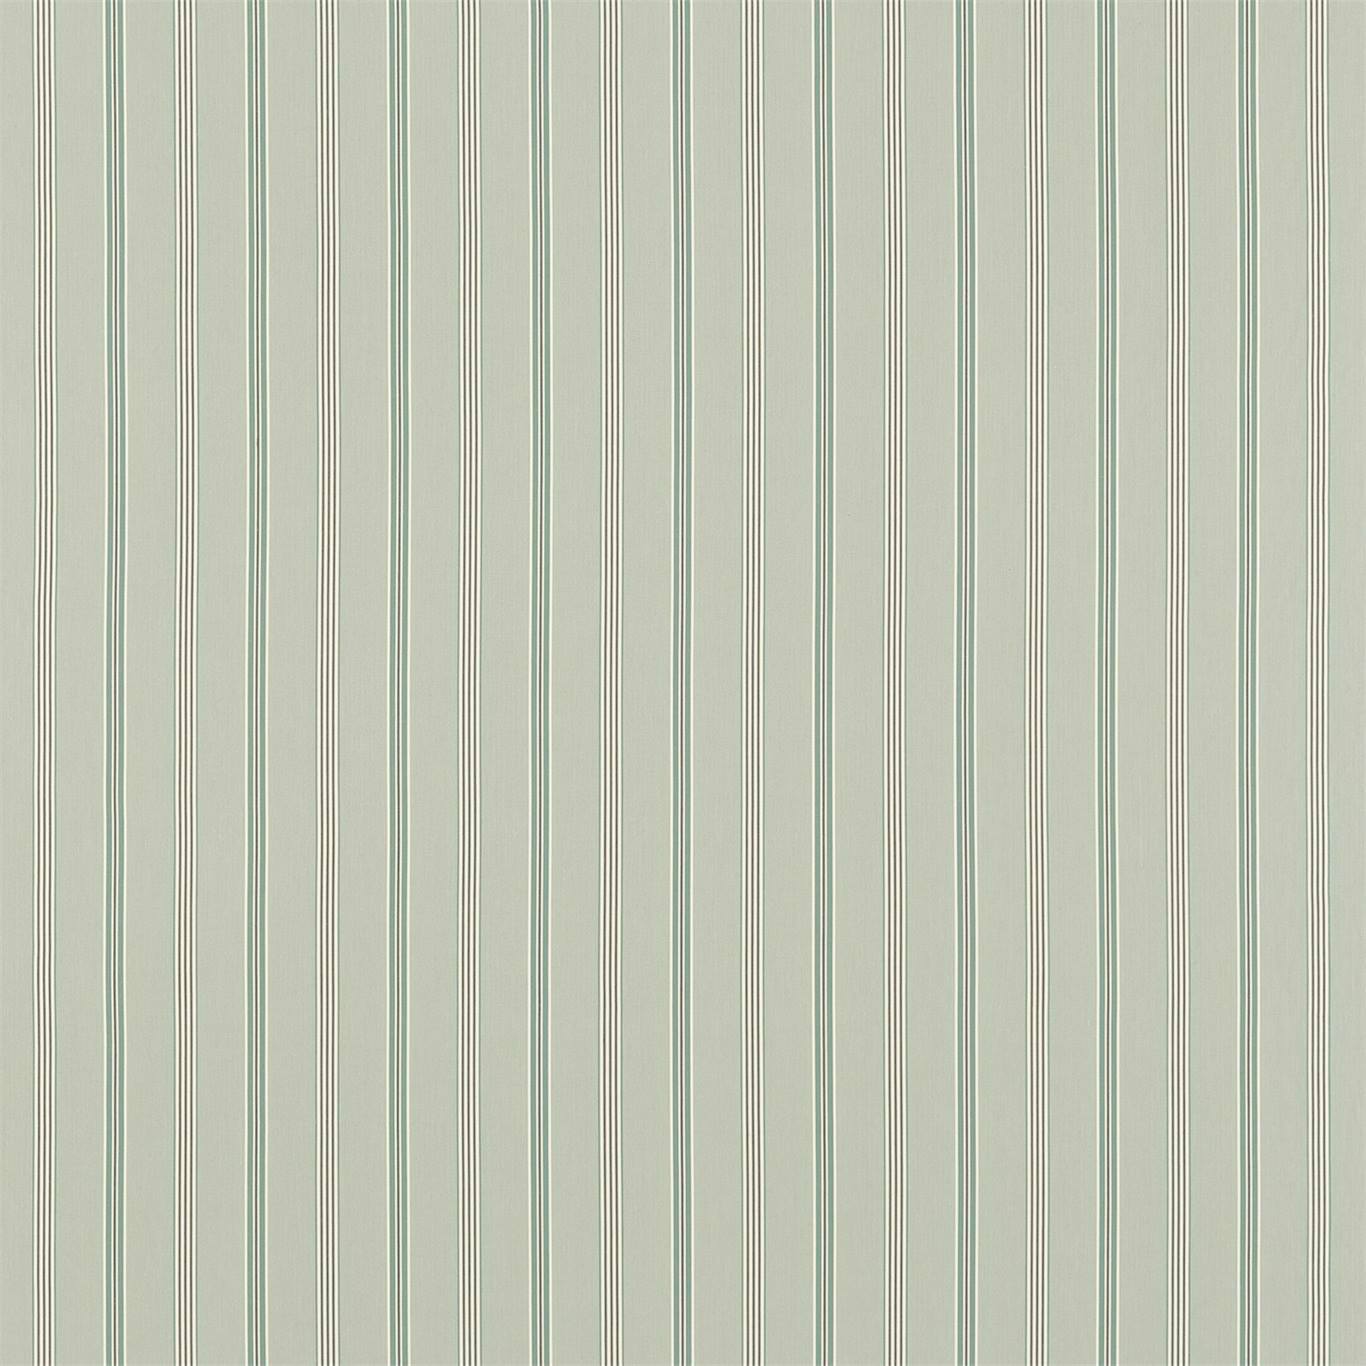 Brecon Fabric by Sanderson - DMWC237219 - Sea Blue/ Teal